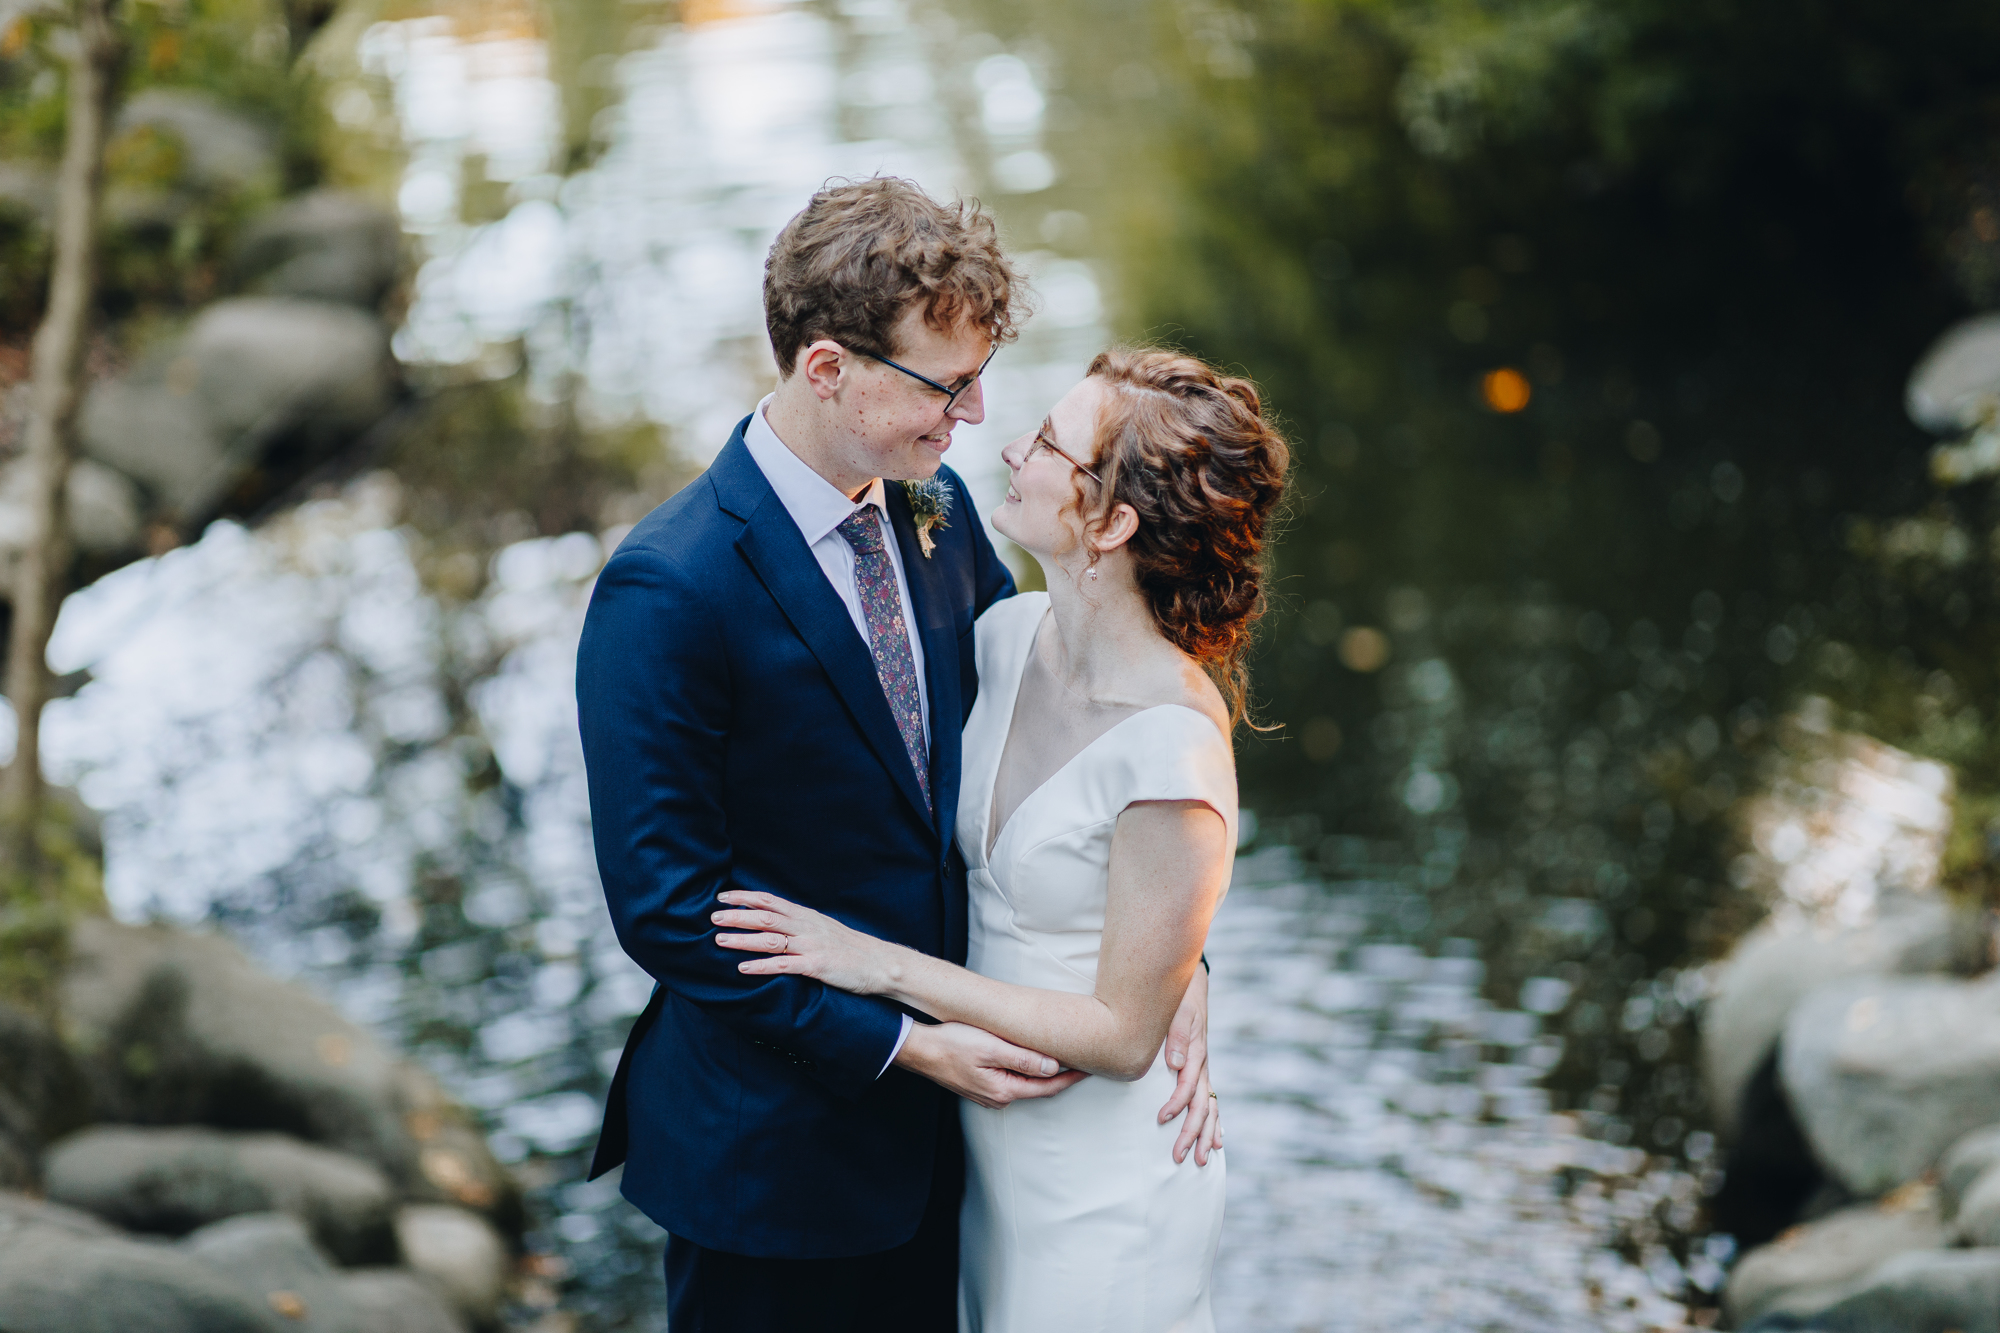 Romantic Brooklyn wedding photos at Prospect Park